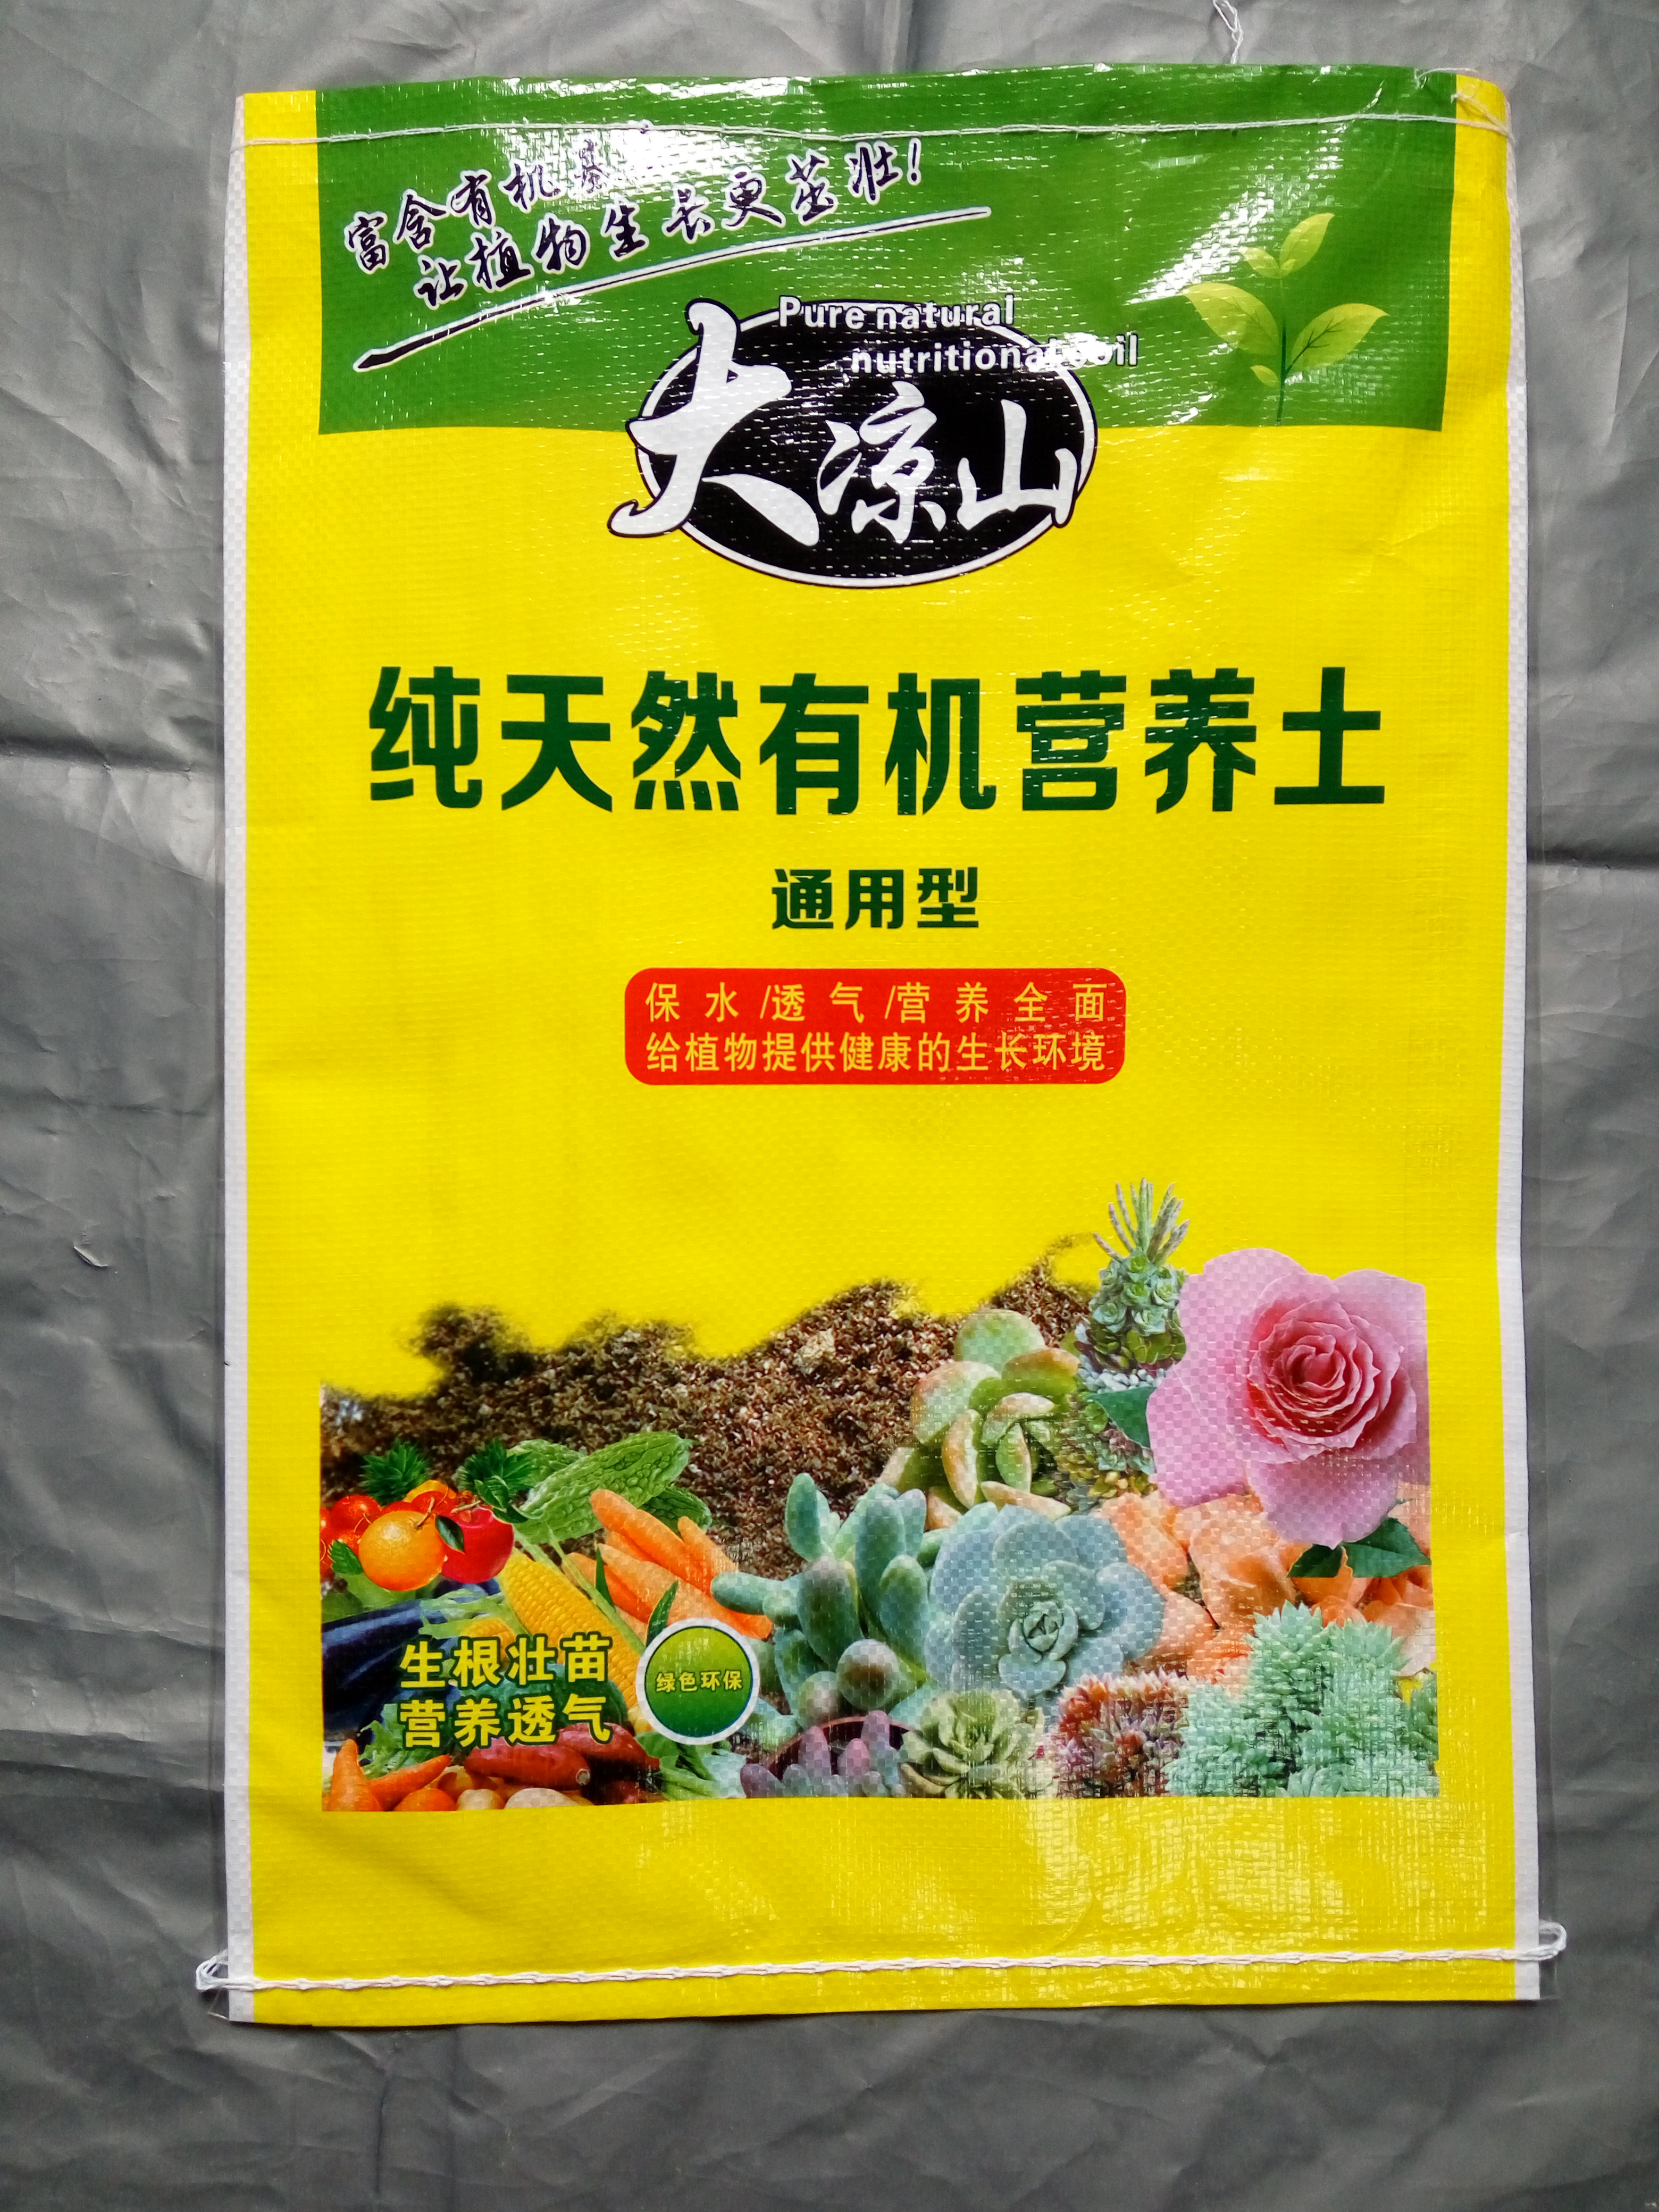 15kg营养土彩印编织袋营养土编织袋厂家营养土外包装袋价格成都